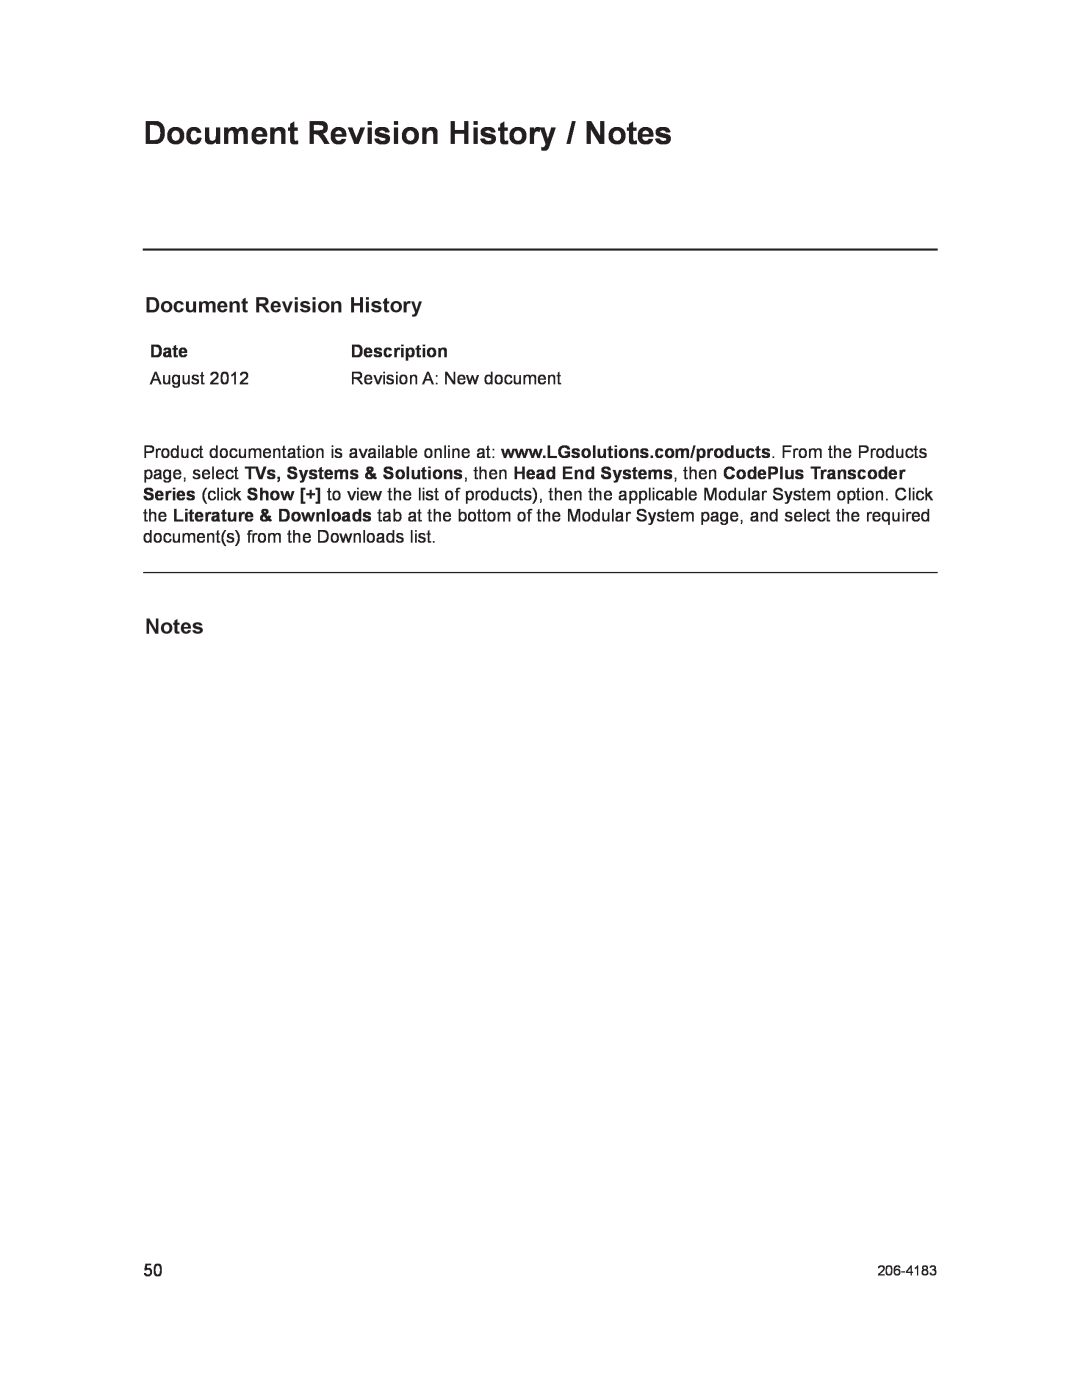 LG Electronics HCS6320 Document Revision History / Notes, Date, Description, August, Revision A New document, 206-4183 